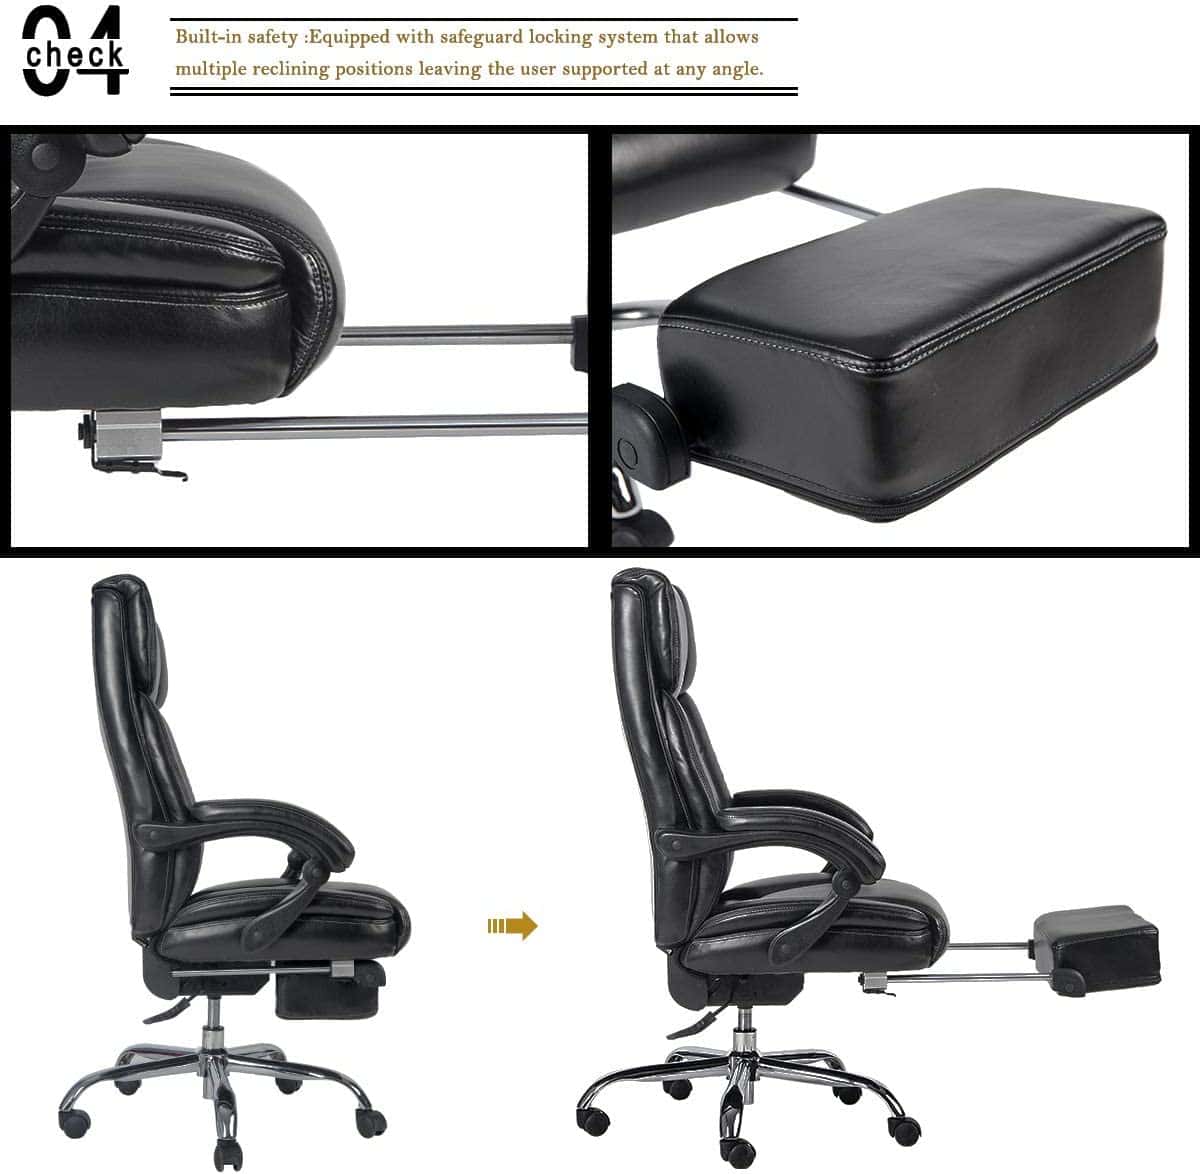 Merax Inno Series Executive High Back Napping Chair